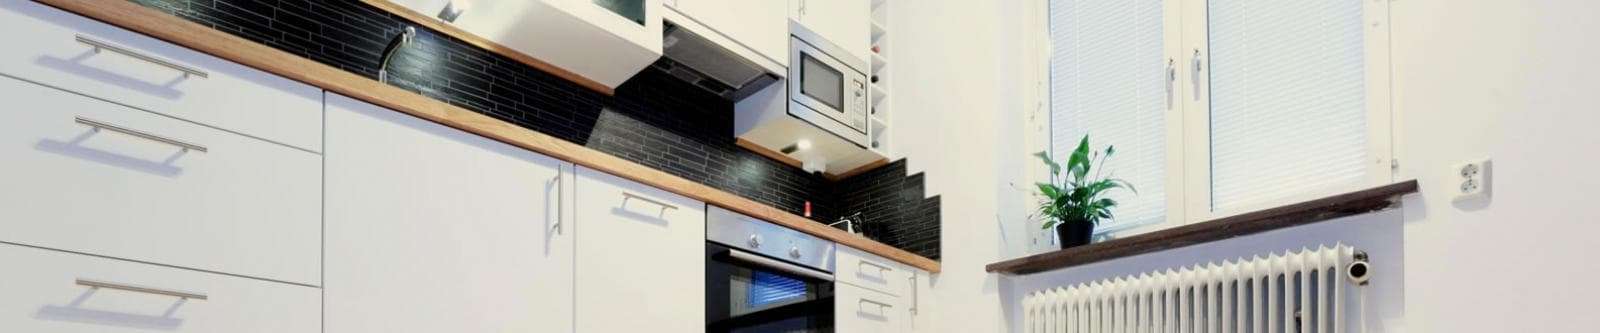 Underfloor heating kitchens and batthrooms